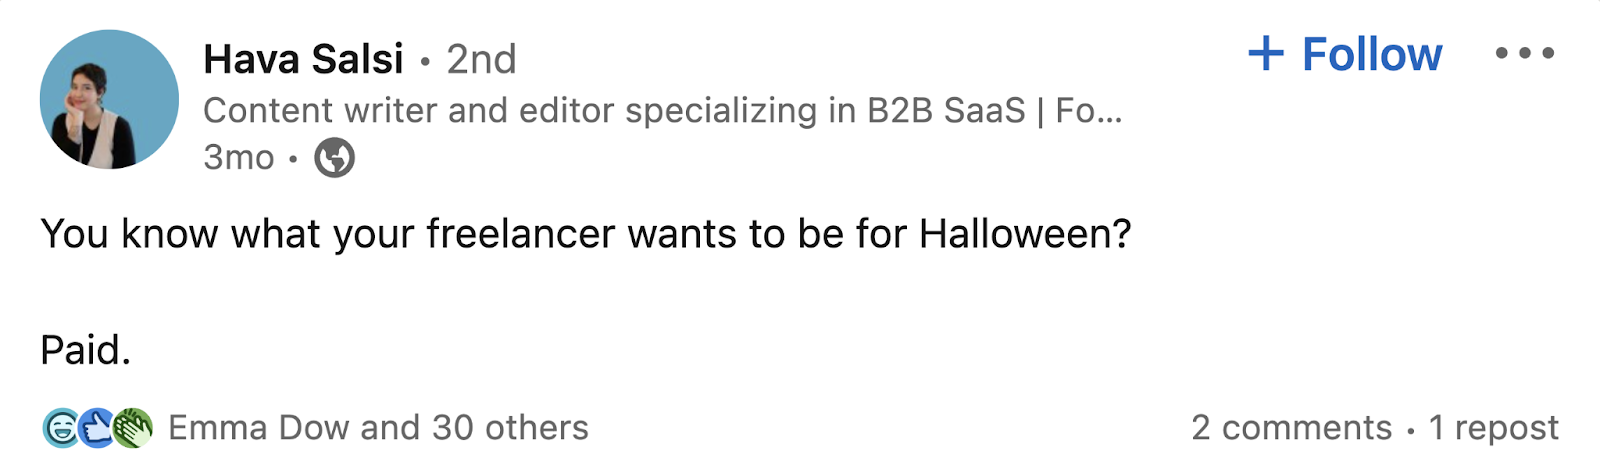 Hava Salsi's LinkedIn post making a joke about freelancers and Halloween